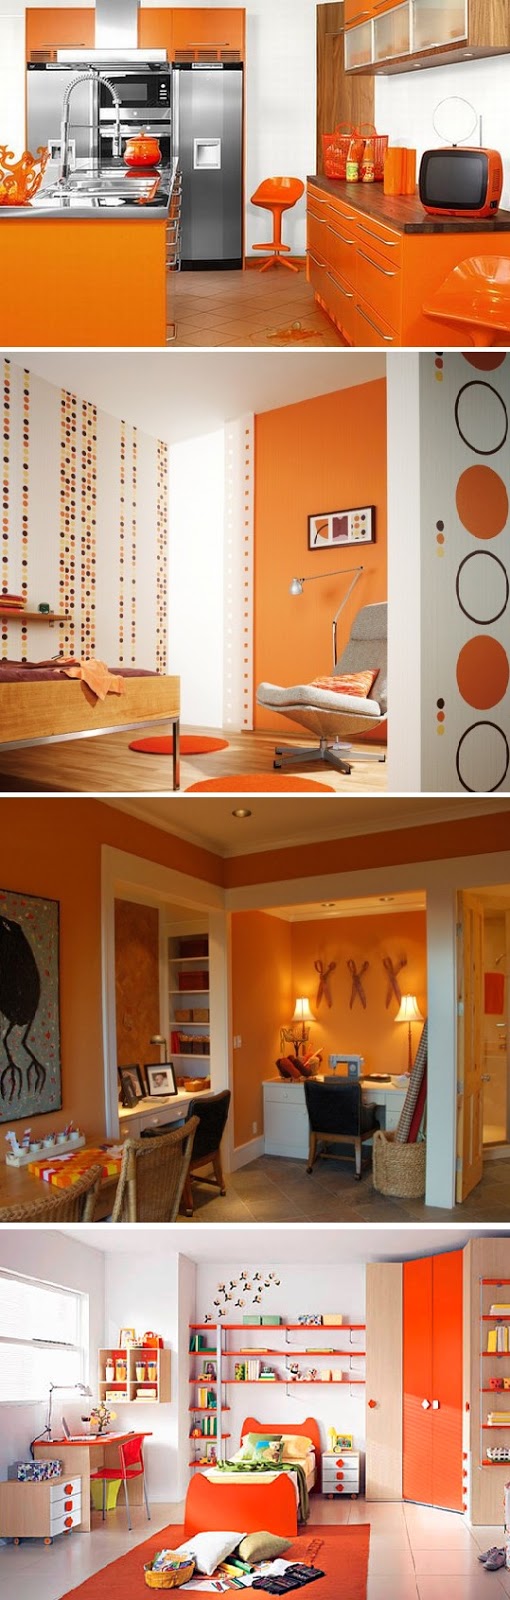 Bright Orange Interior Décor To Warm Your Home | Home Decorating Ideas